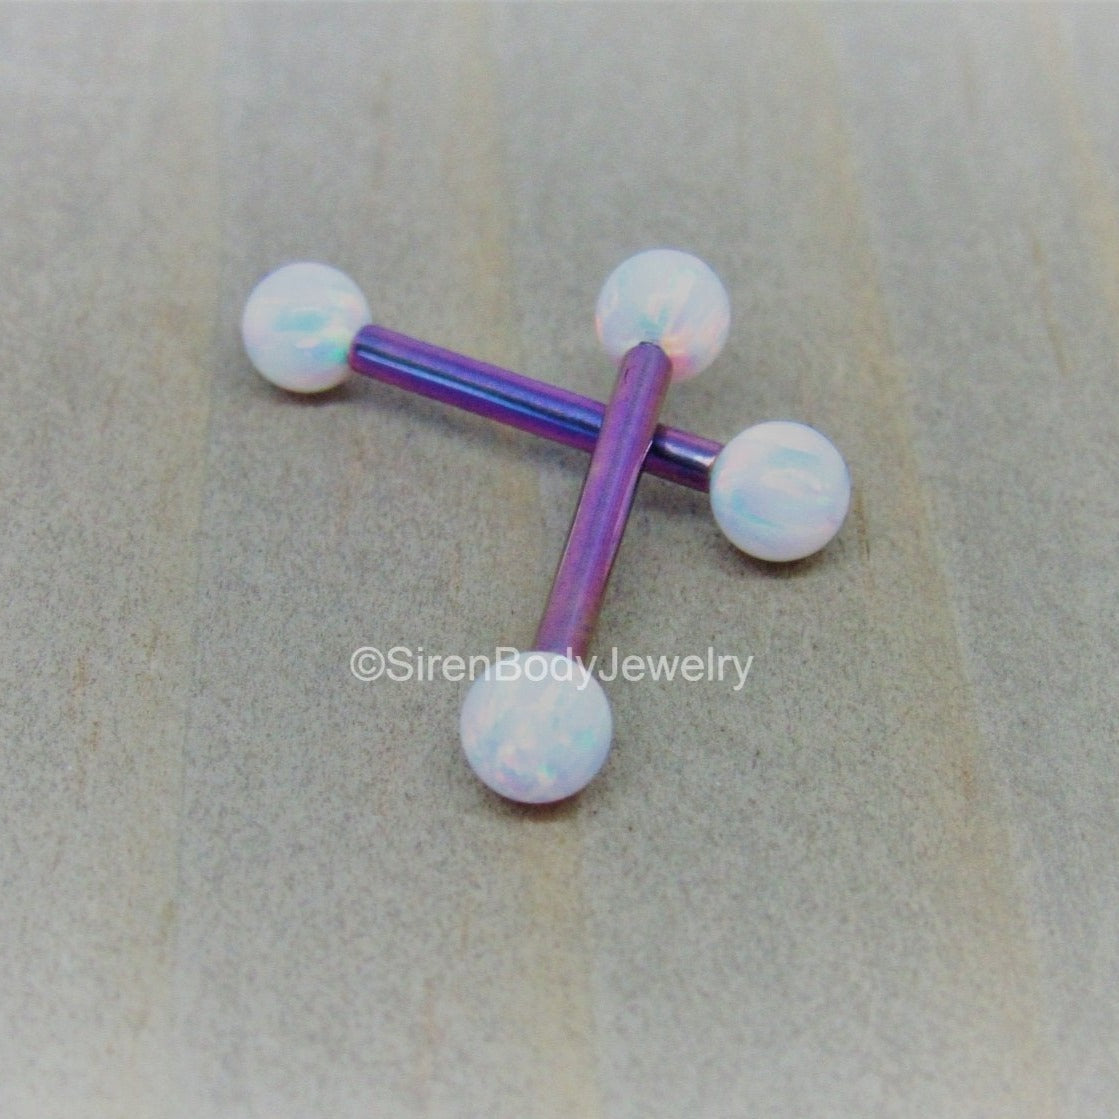 14g 4mm white opal blurple anodized titanium nipple piercing barbells